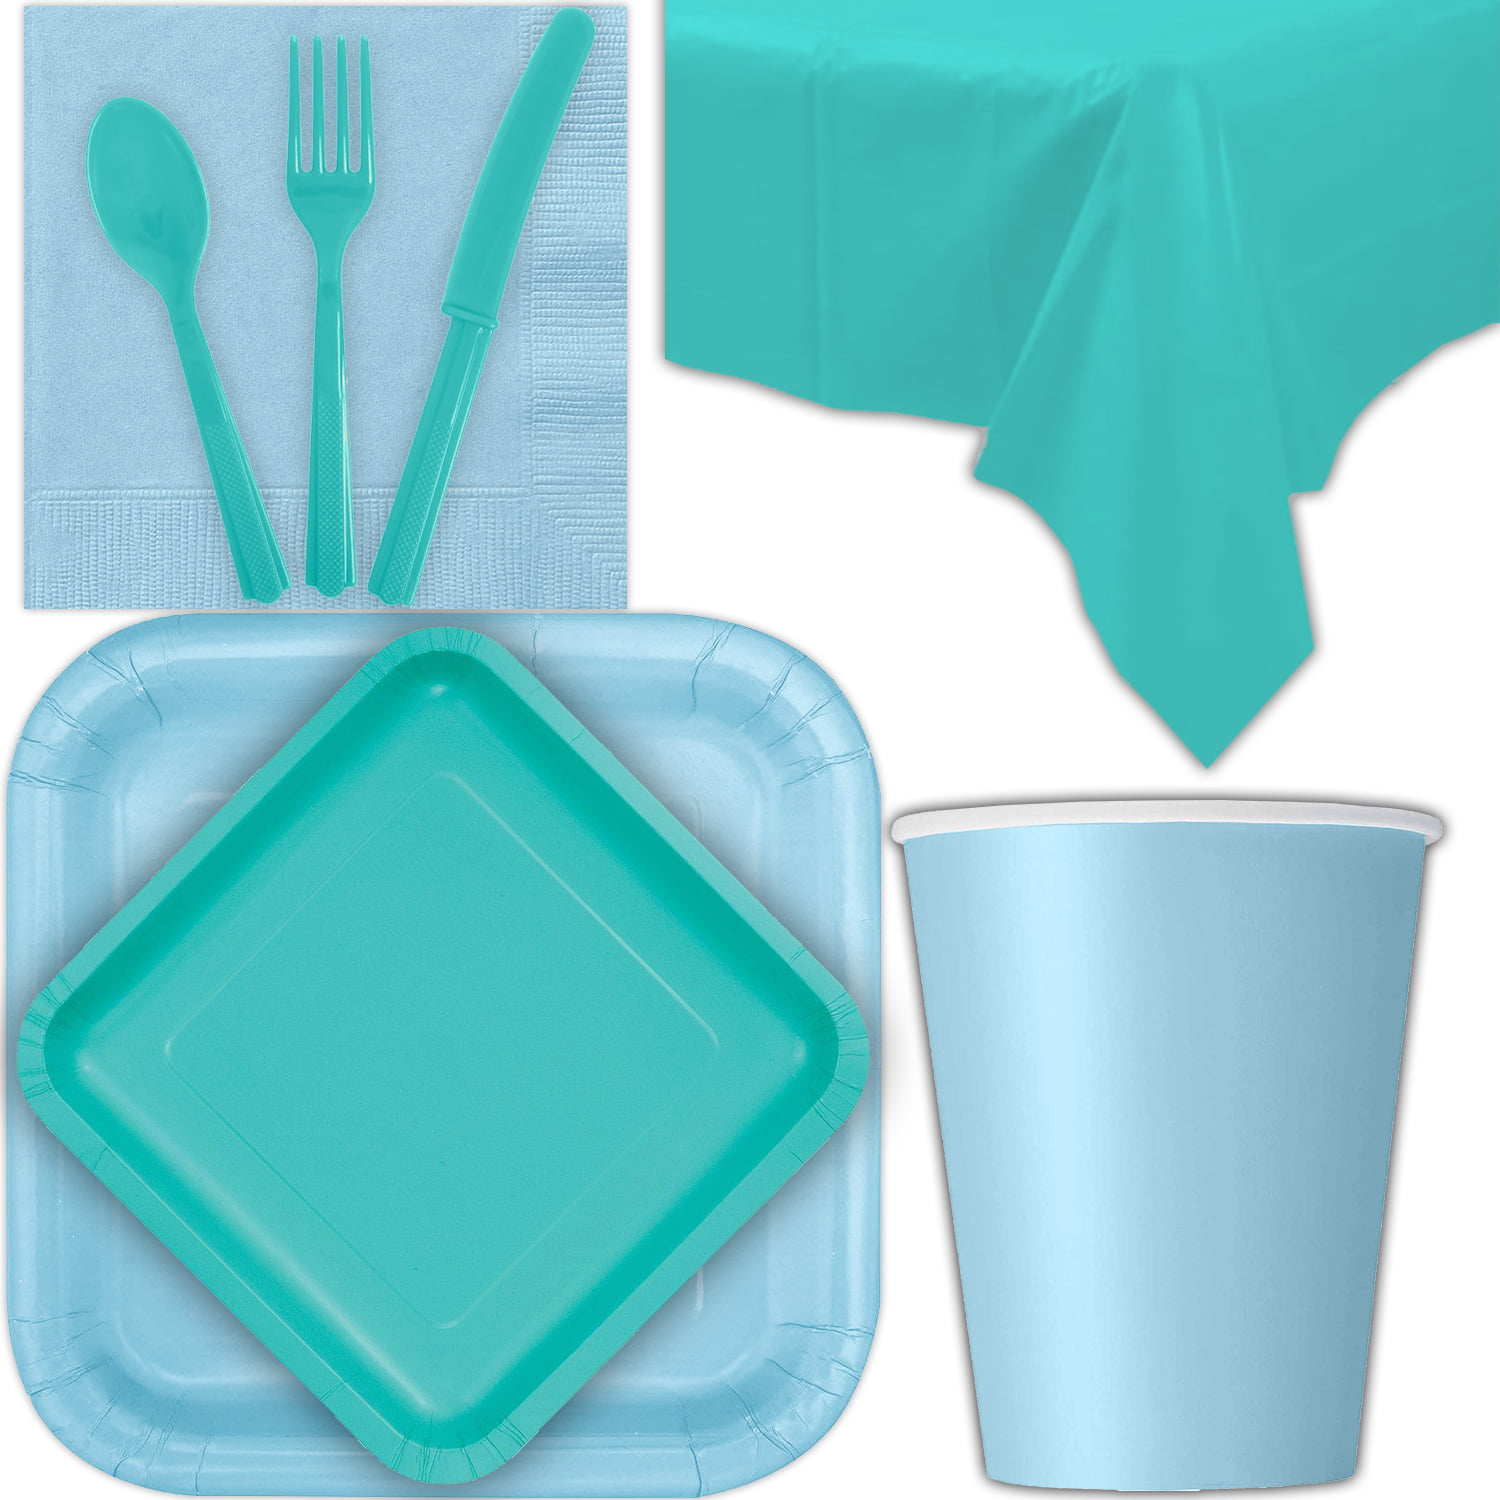 Teal Turquoise Aqua Blue Party Plates Napkins Cups Table Cover Plain 